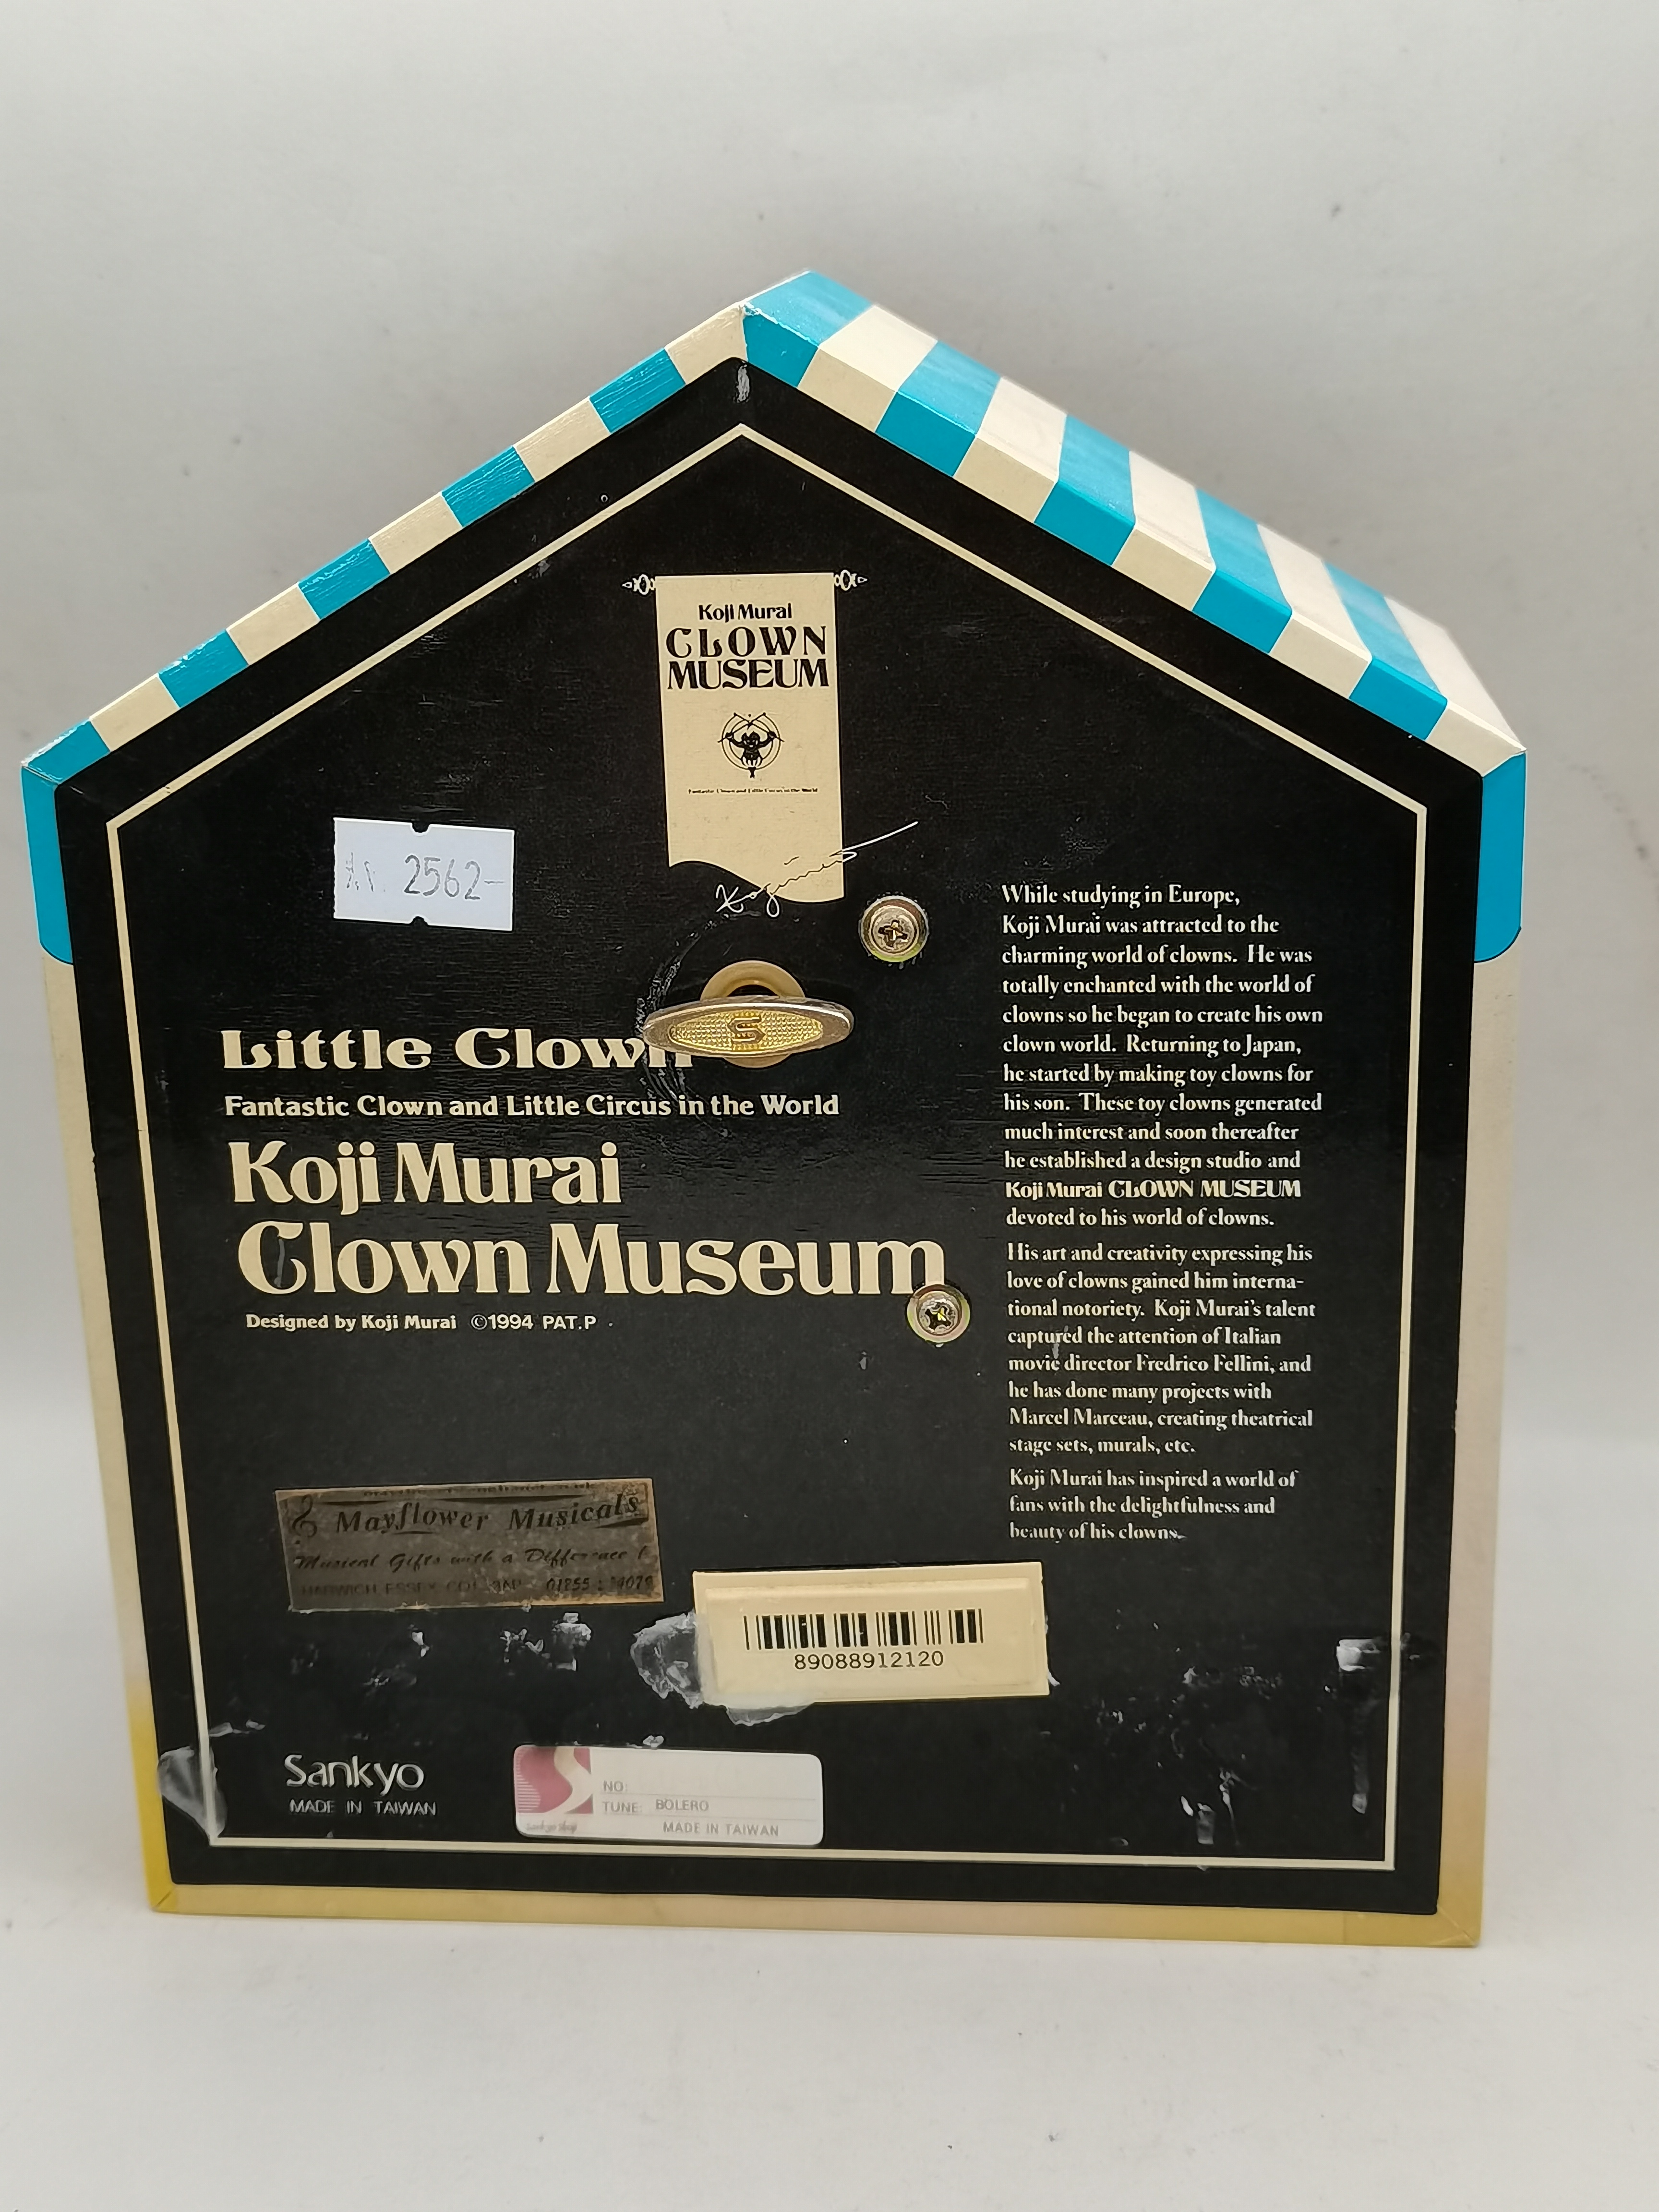 Koji Murai Clown Museum in working order - Image 2 of 2